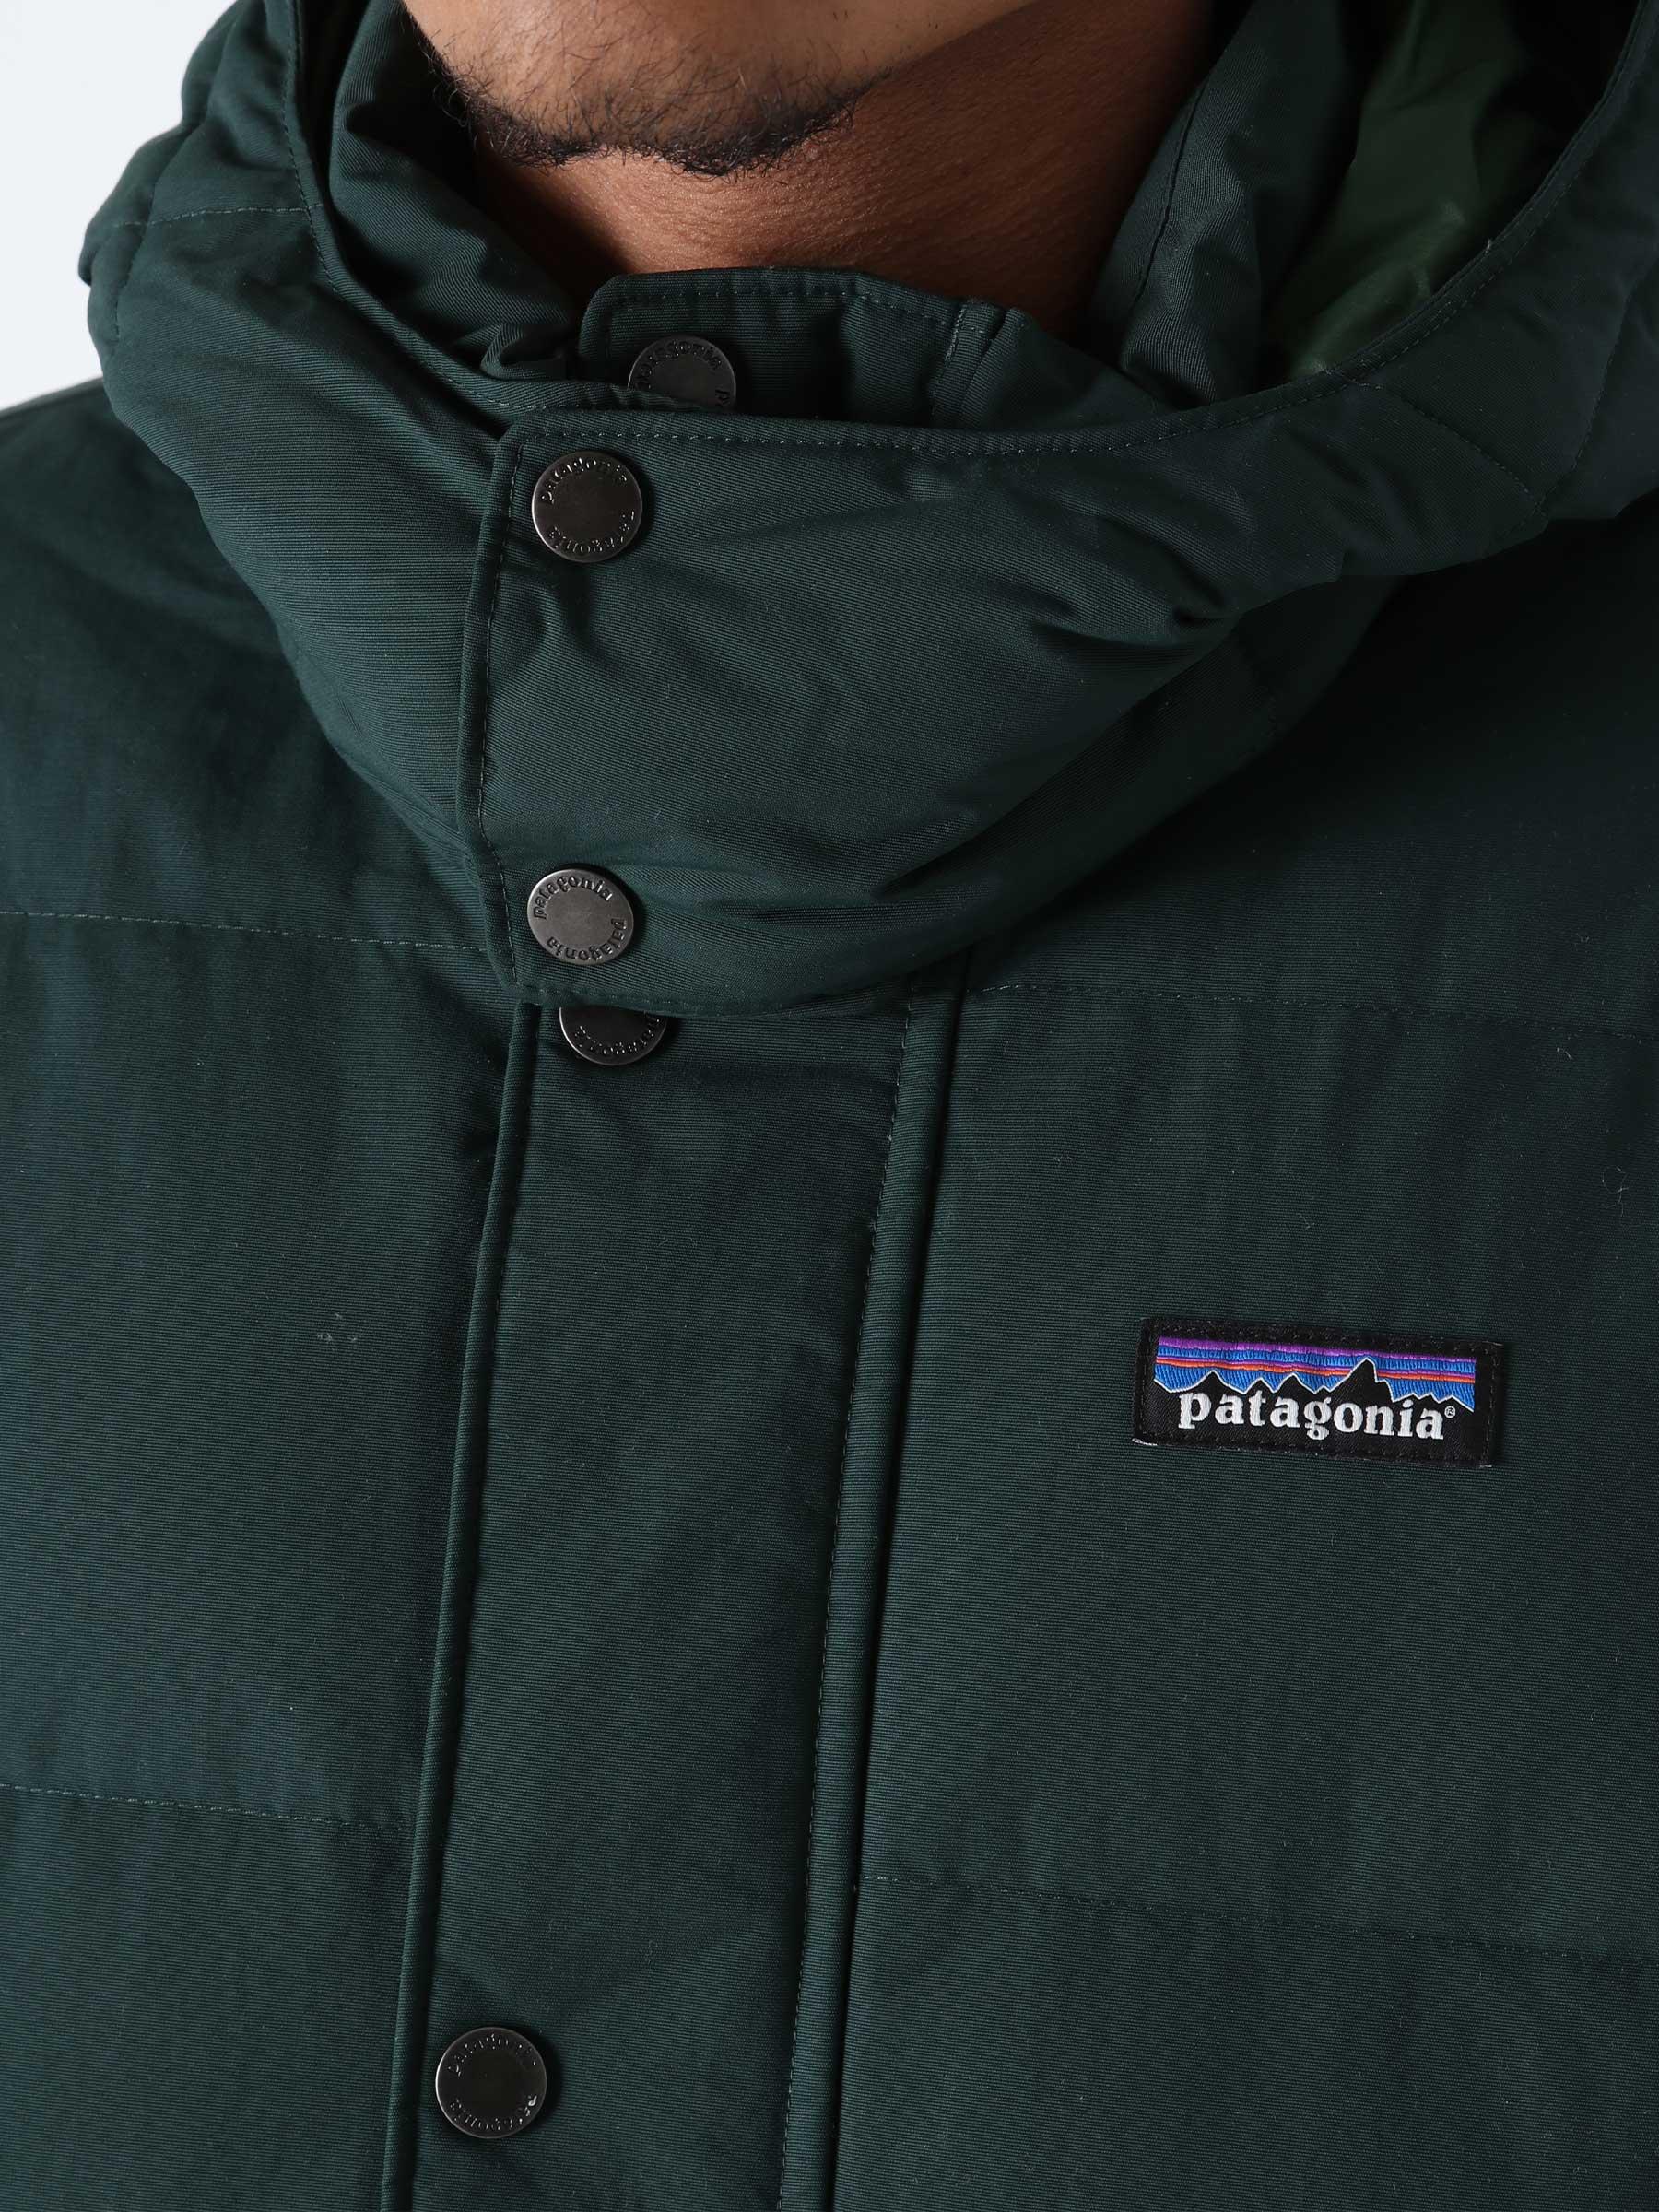 M's Downdrift Jacket Northern Green 20600